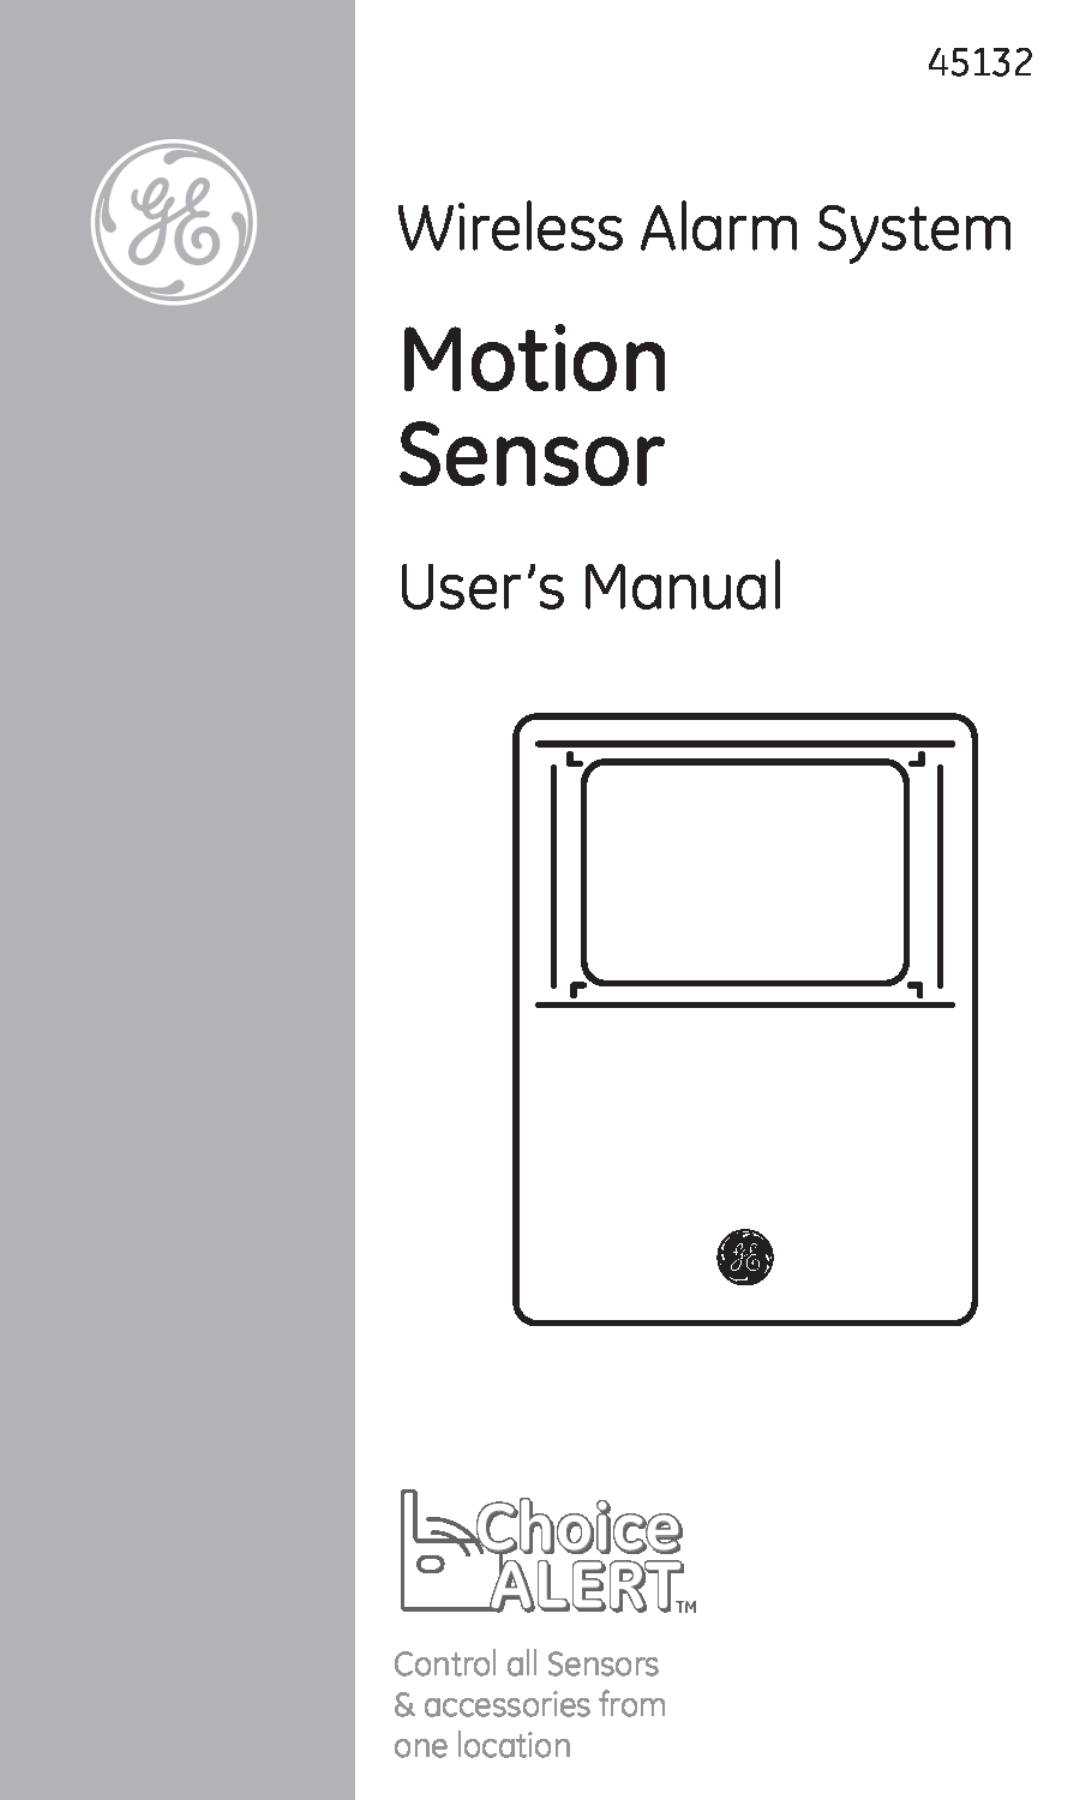 Jasco 45132 user manual Motion Sensor, Choice ALERT, Wireless Alarm System, Control all Sensors 